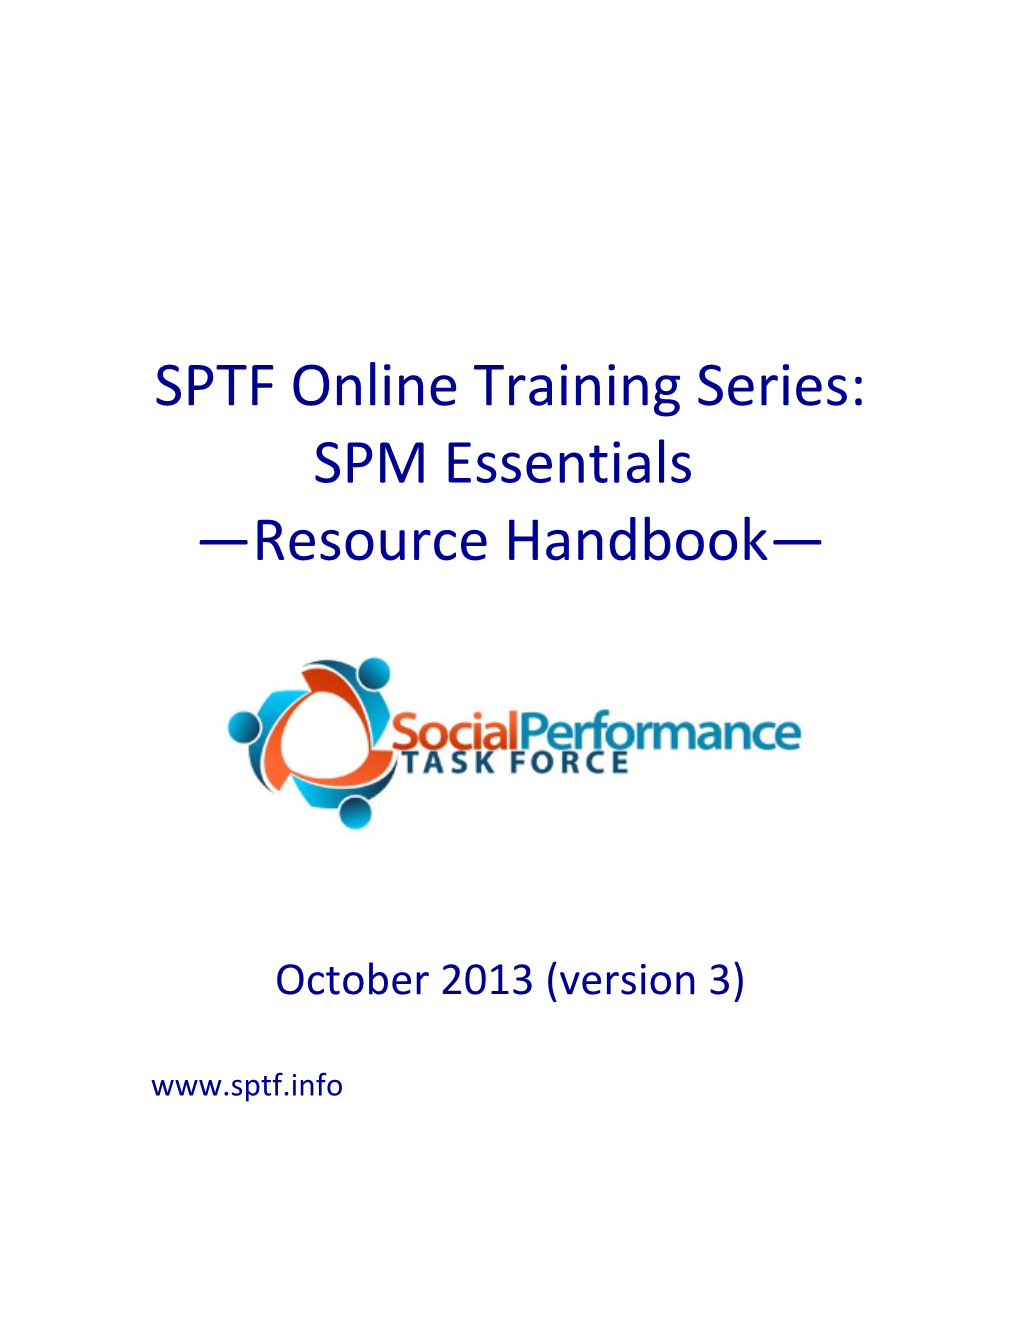 SPTF Online Training Course Resource Handbook